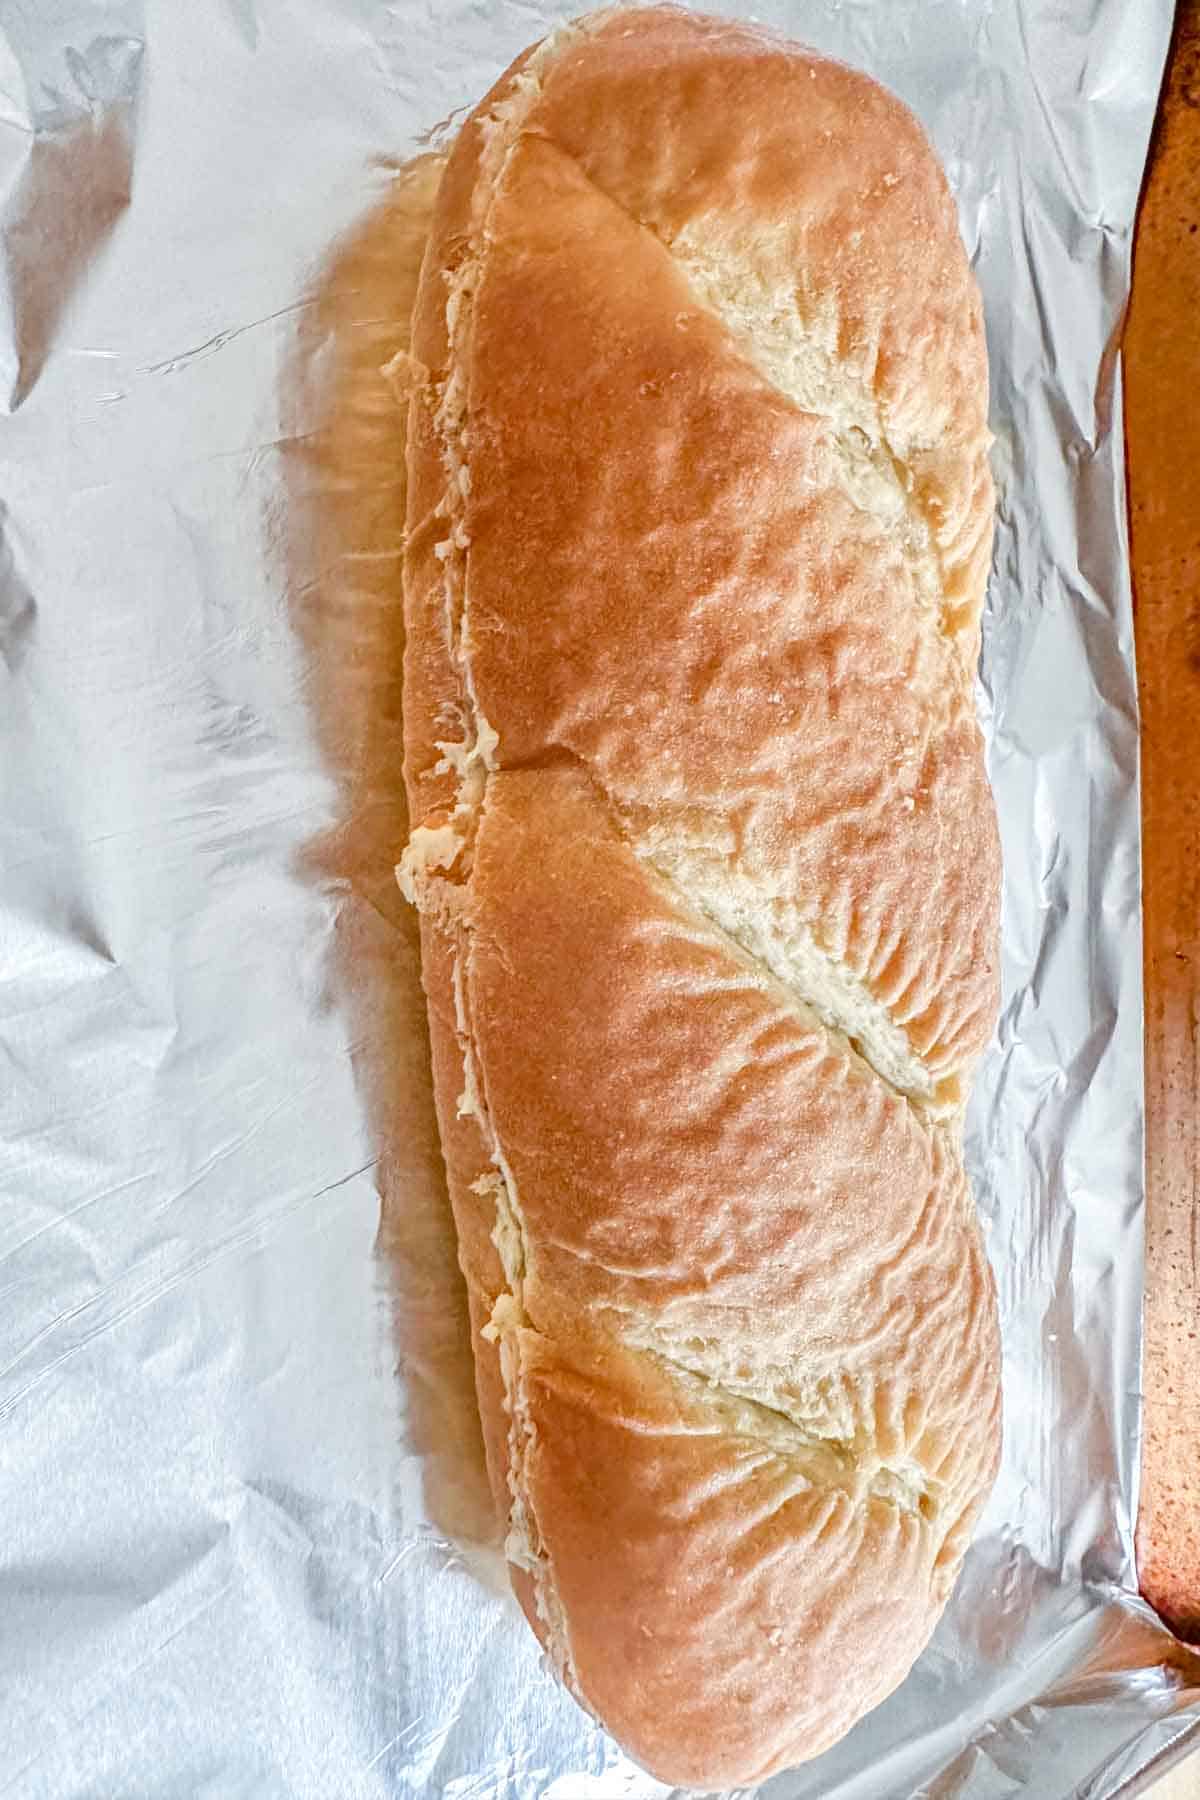 Loaf of garlic bread sandwiched together before baking.